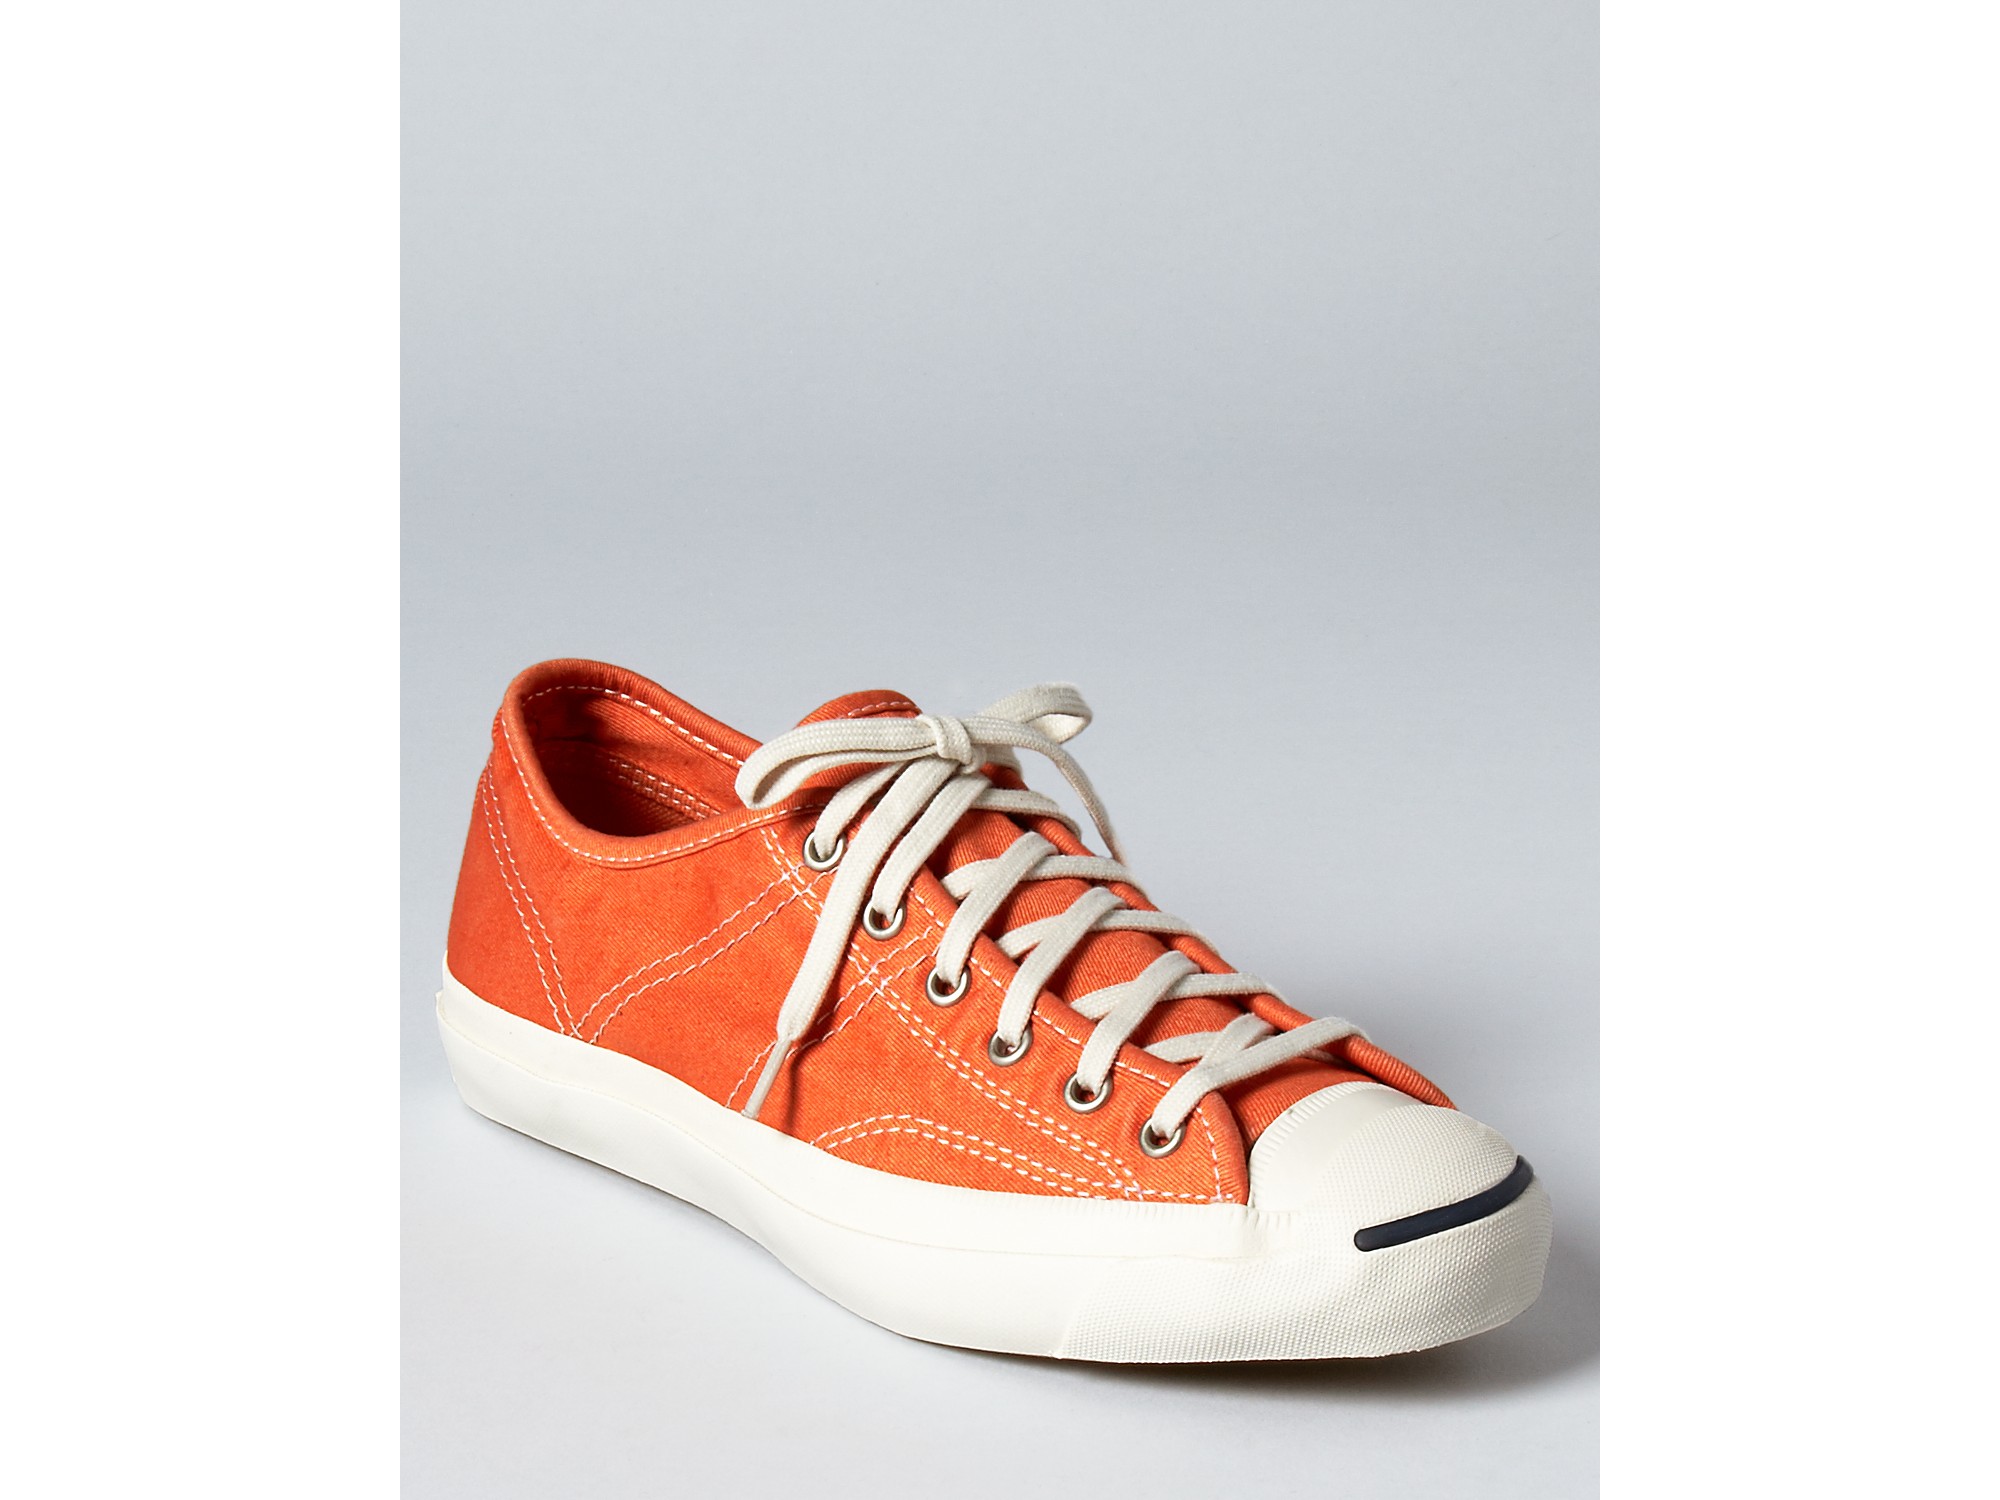 Lyst - Converse Jack Purcell Sneakers Helen in Orange